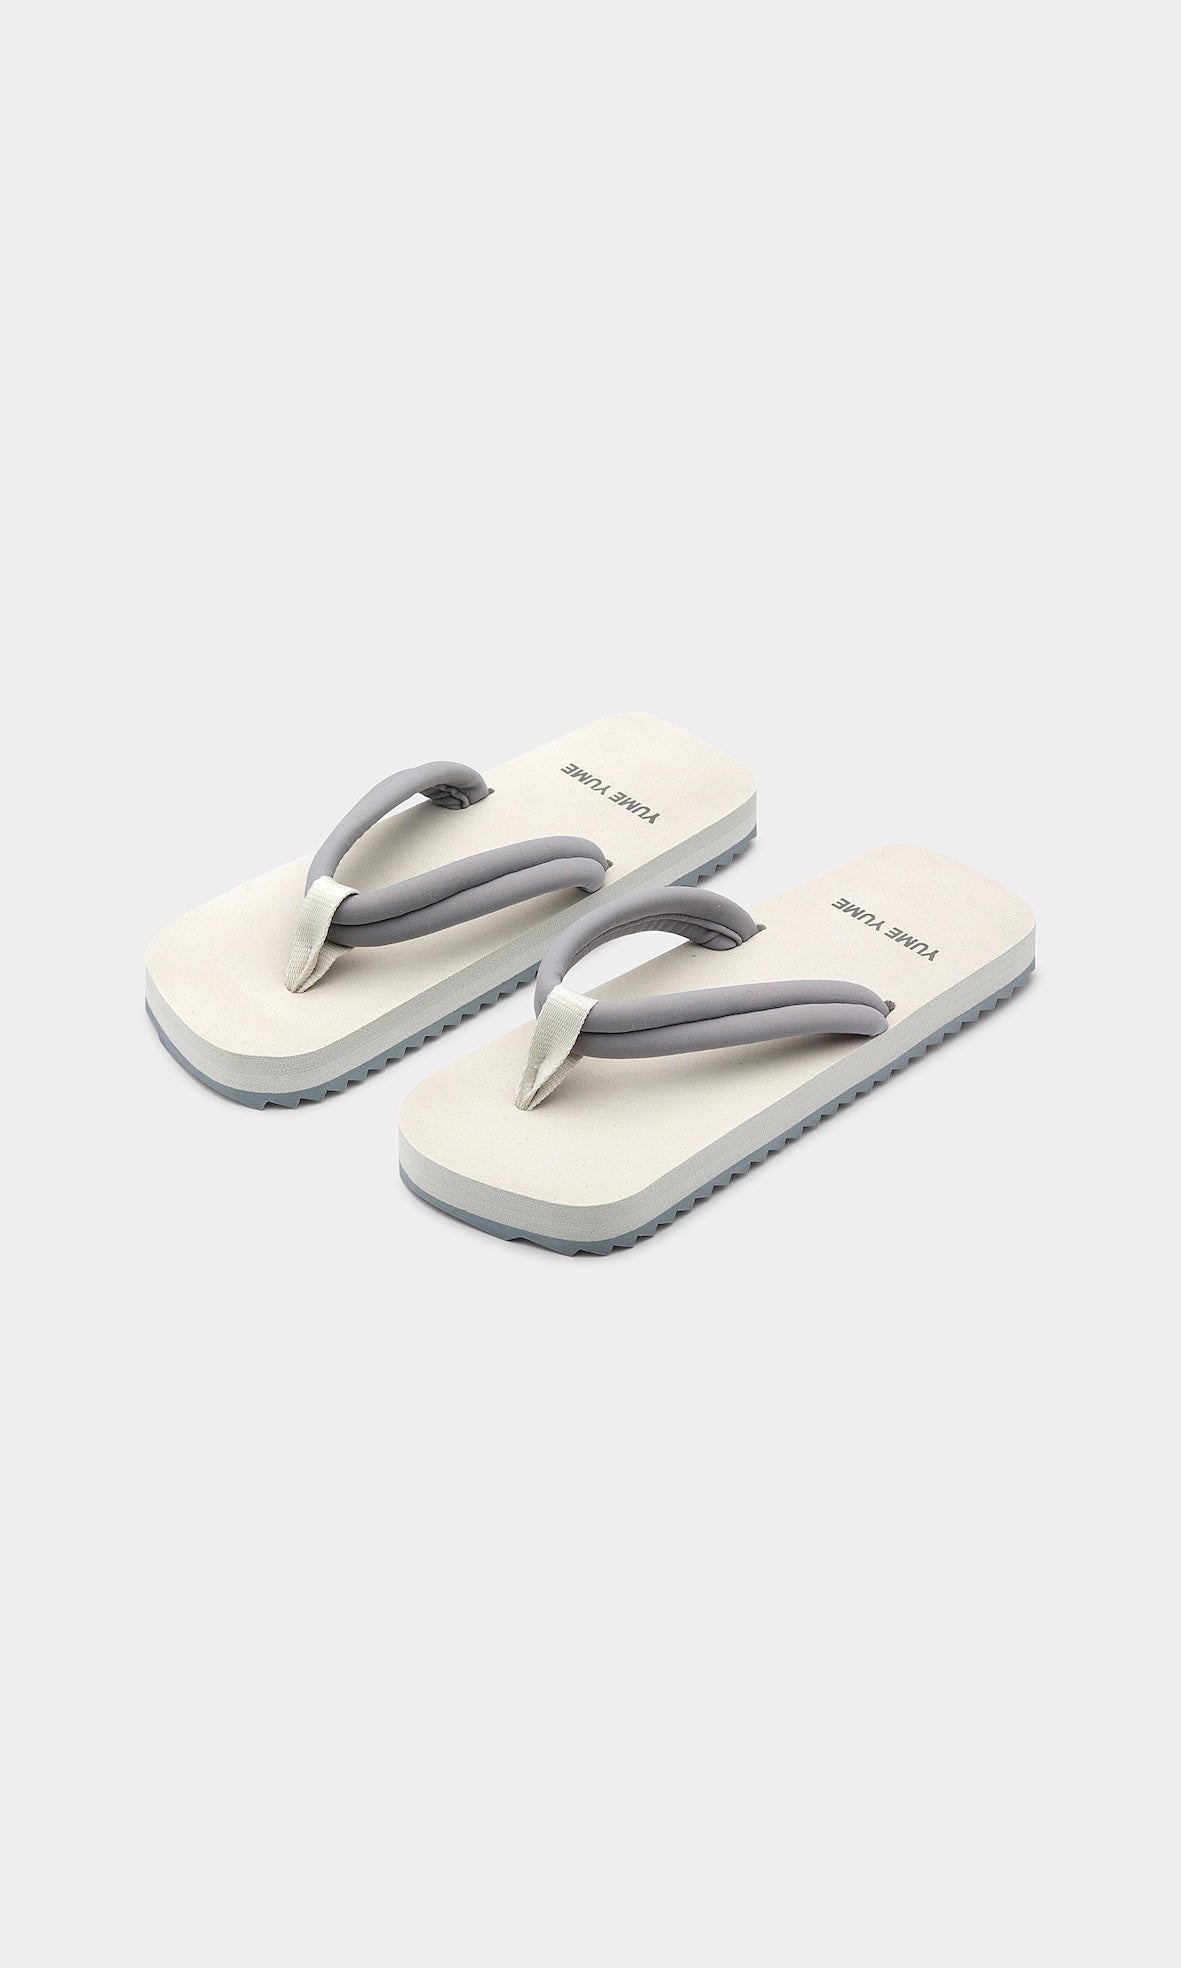 Xigy Grey White Flip Flops XI0003 - 2